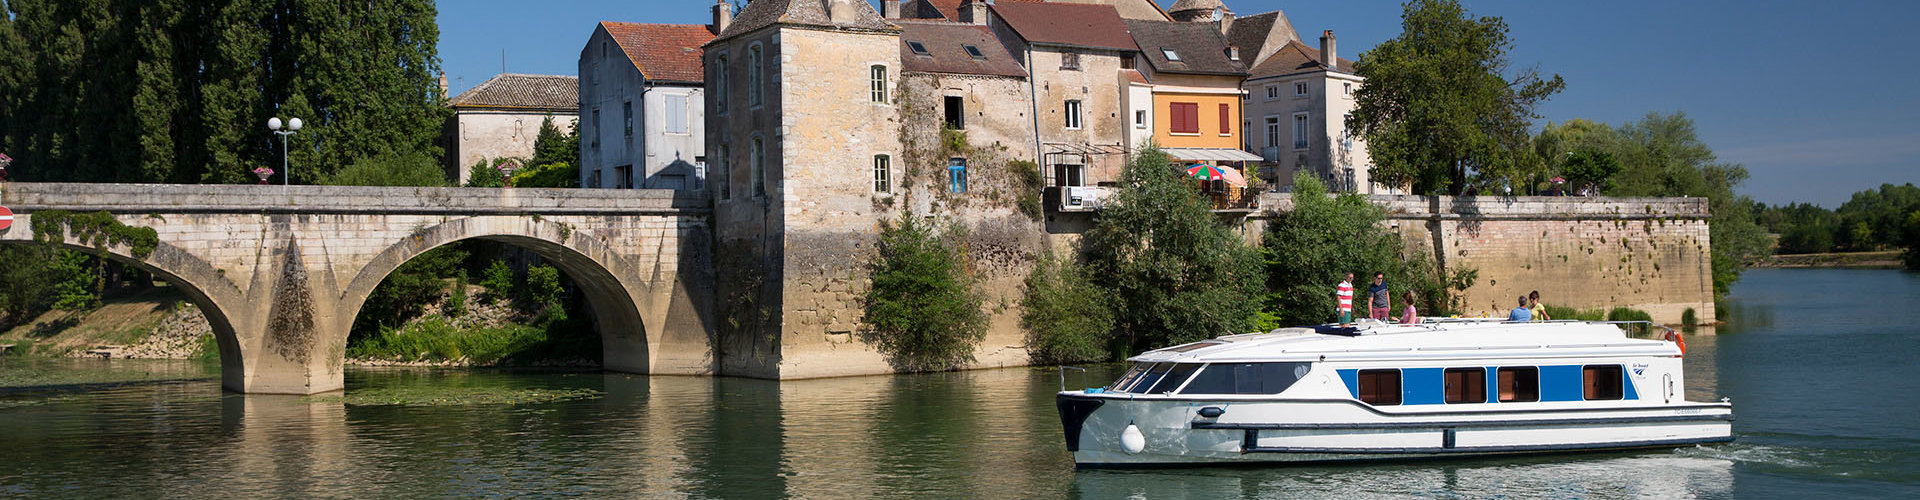 Rivierboot Vision in Bourgondië